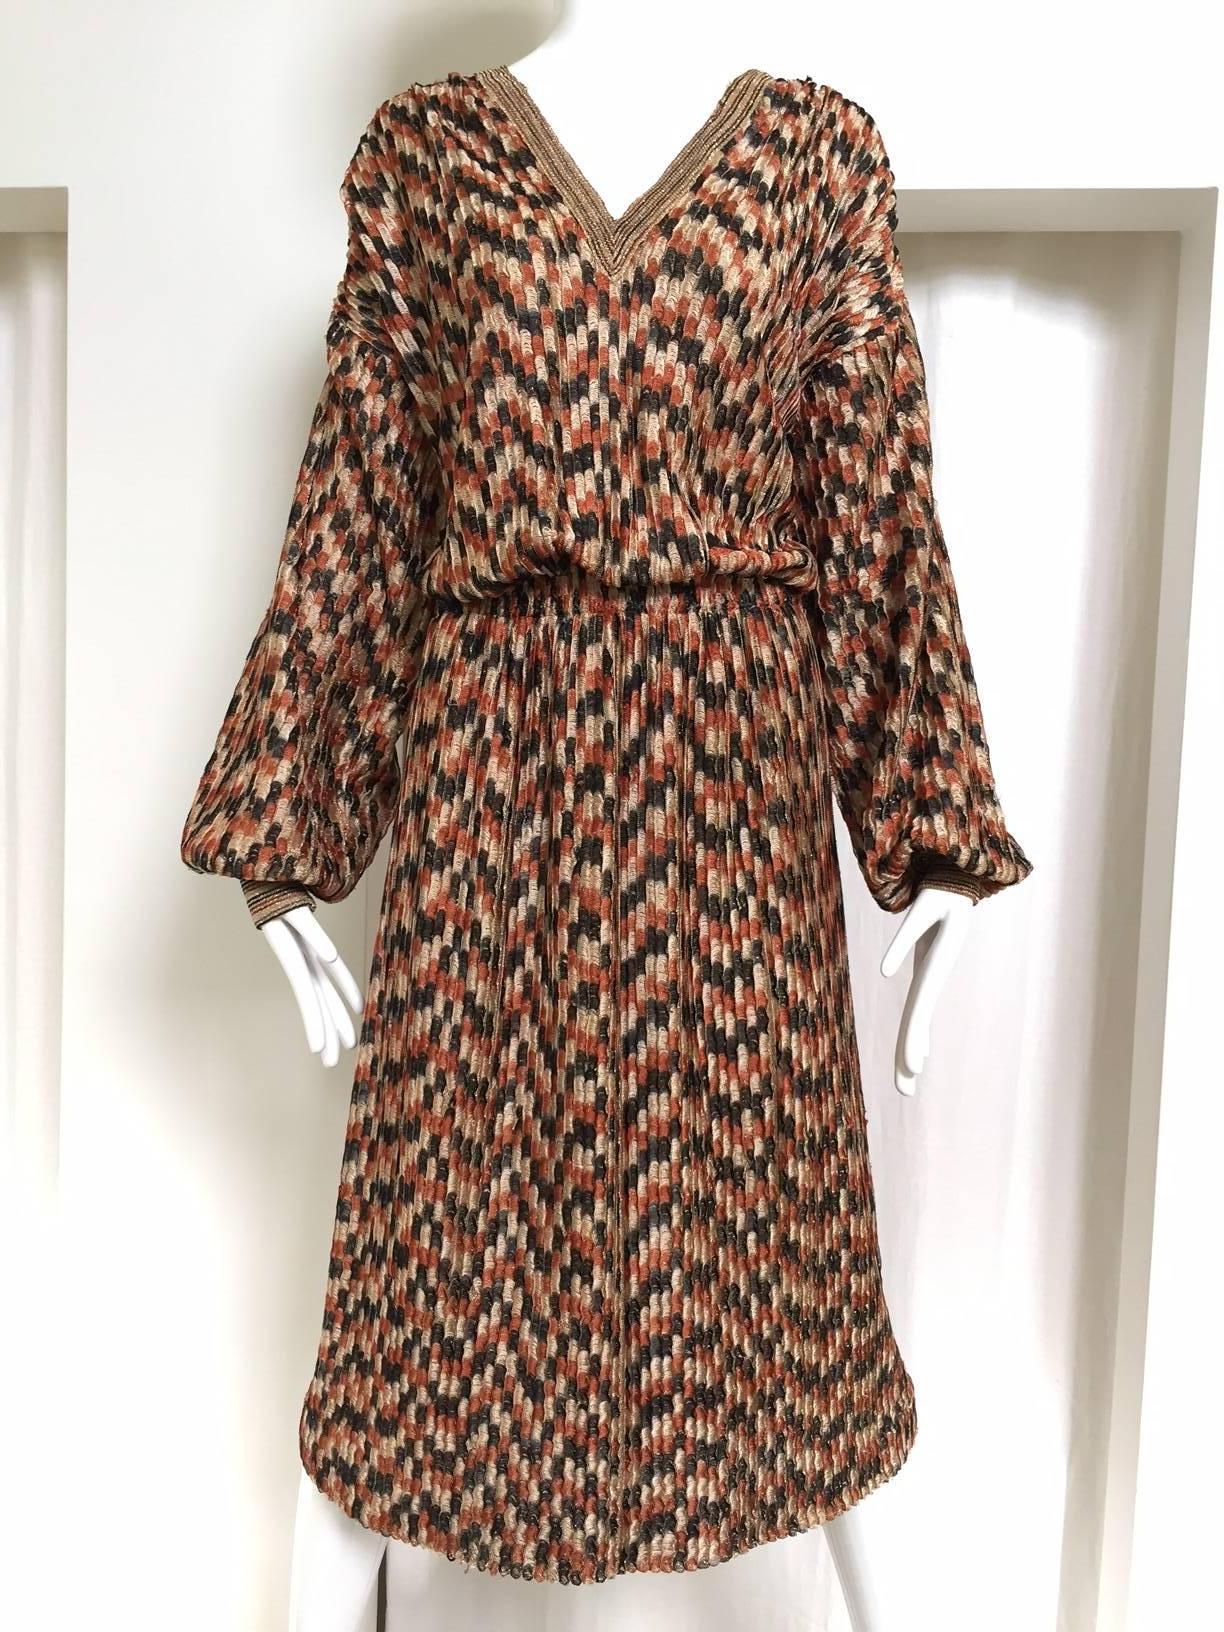 Women's 1980s Missoni brown and metallic knit dress